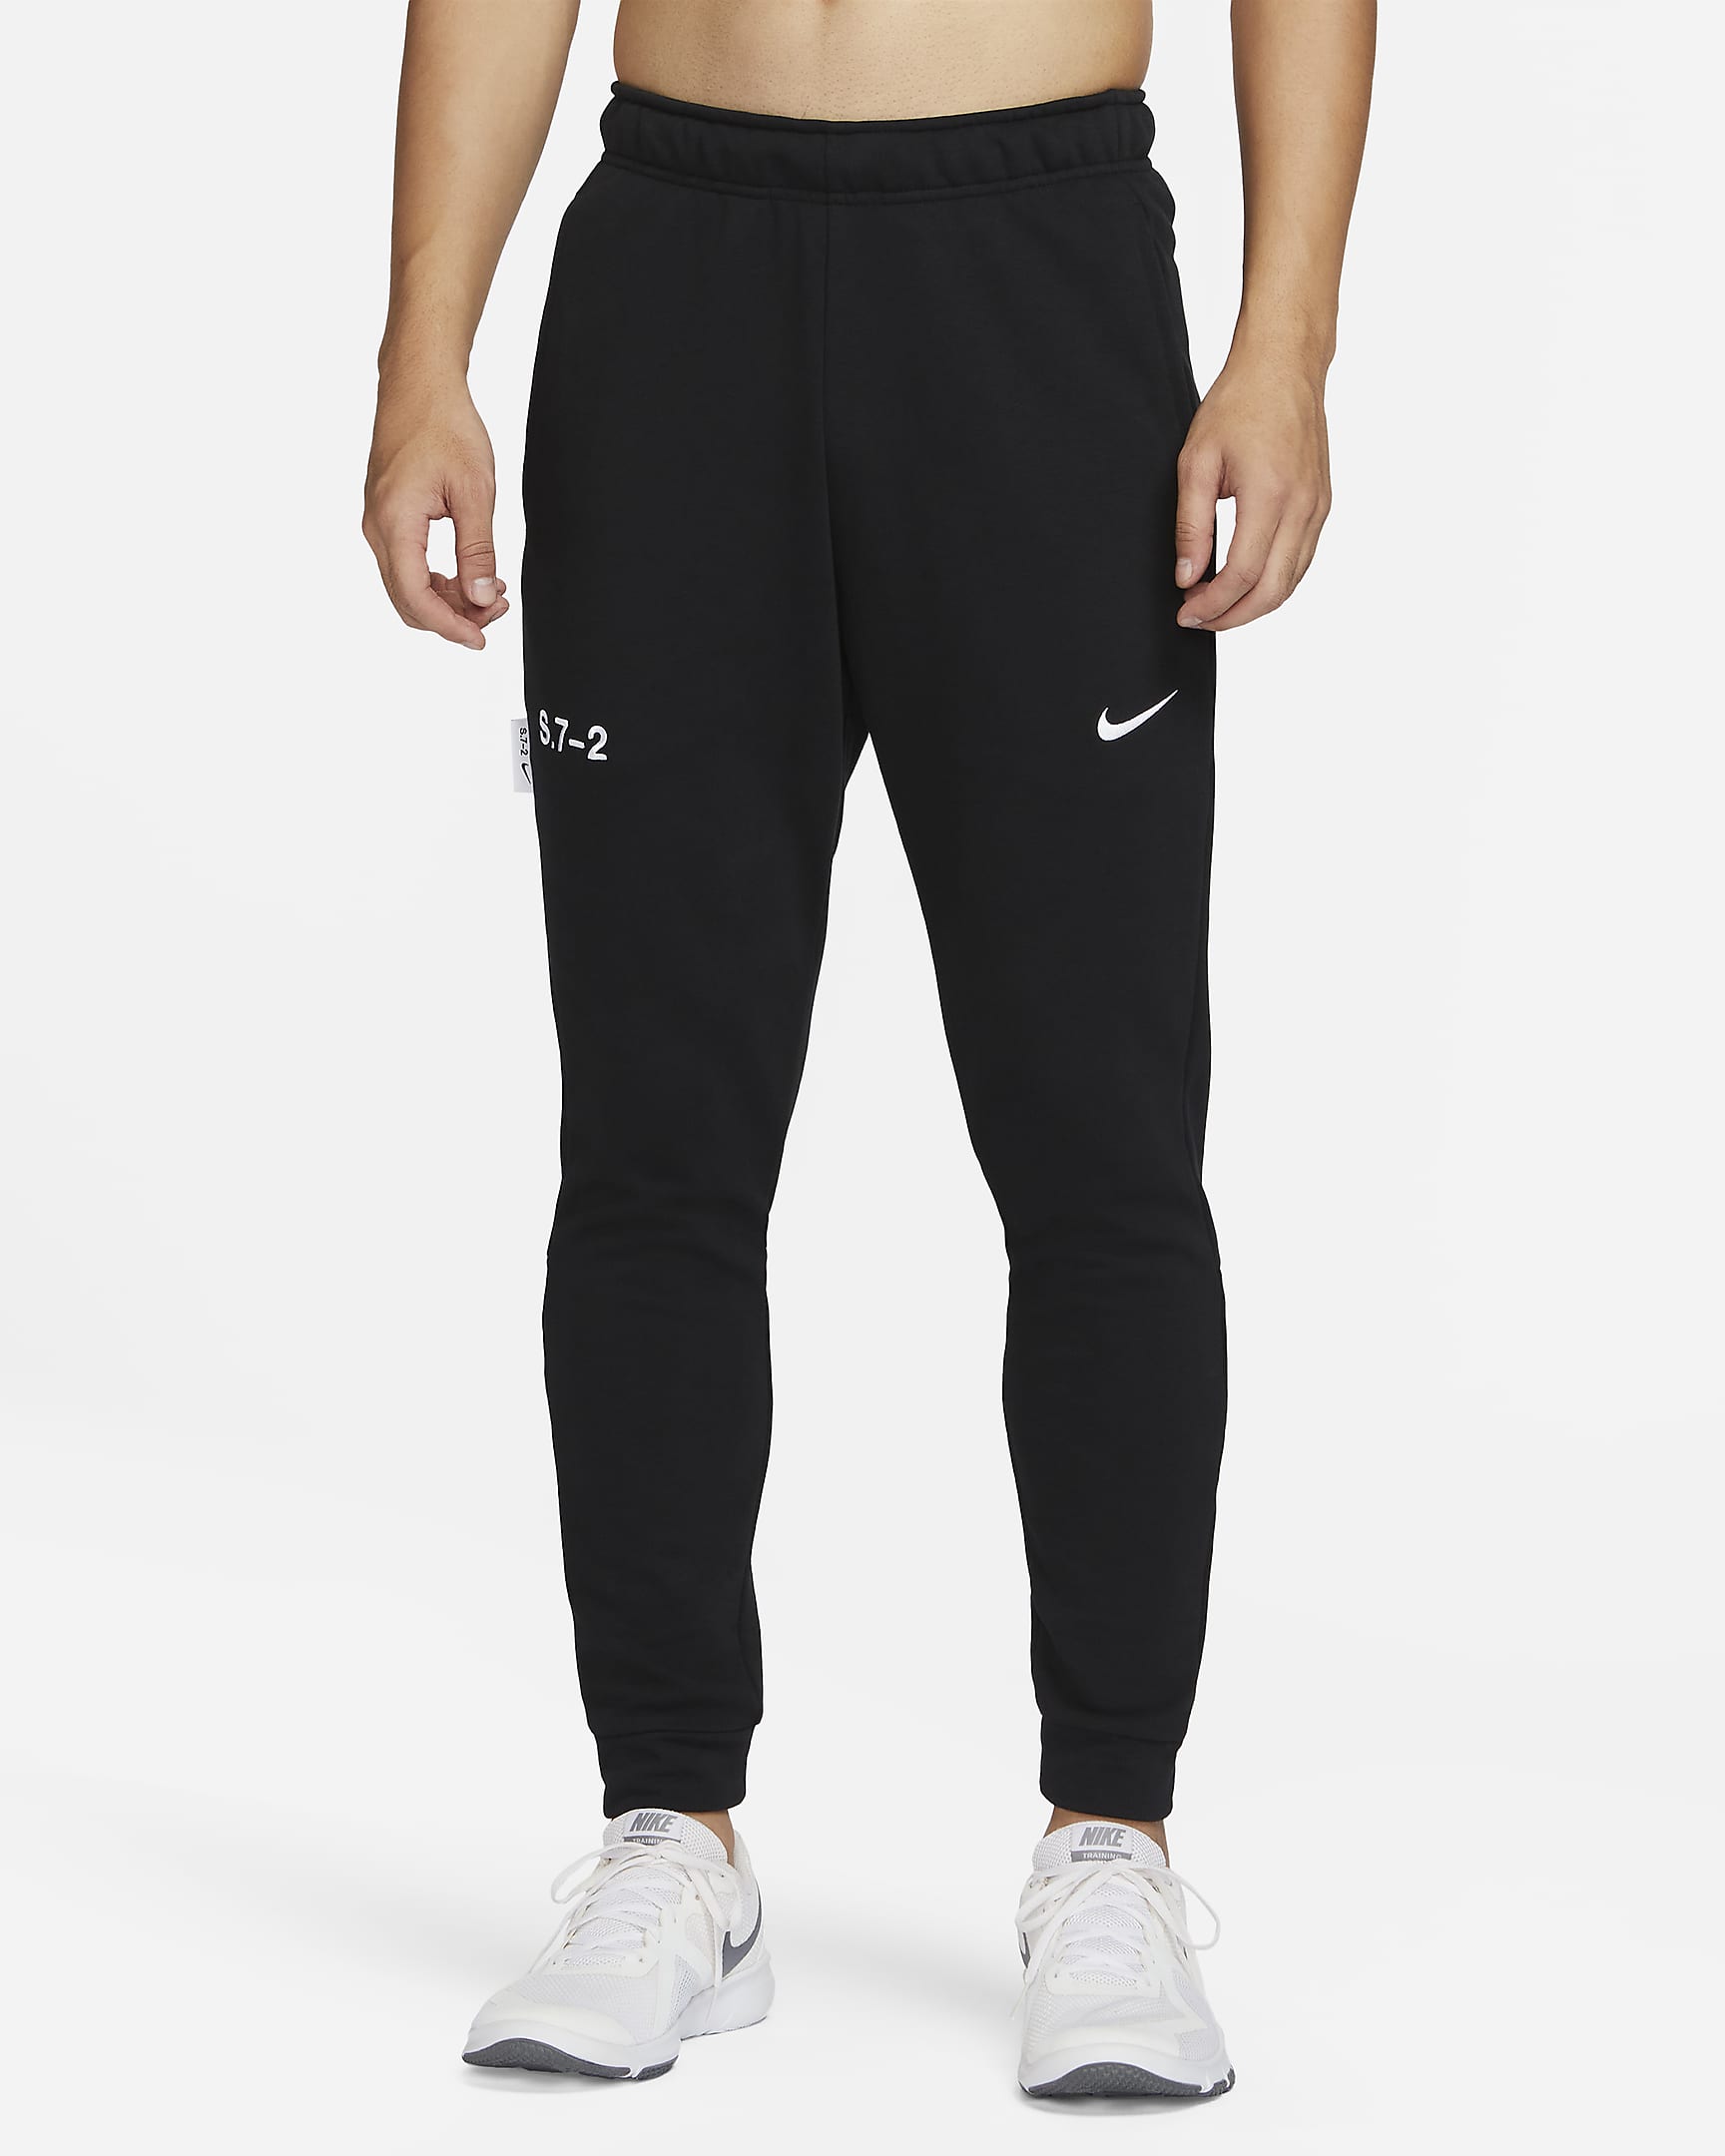 Nike Dri-FIT Studio '72 Men's Tapered Fitness Trousers. Nike SG